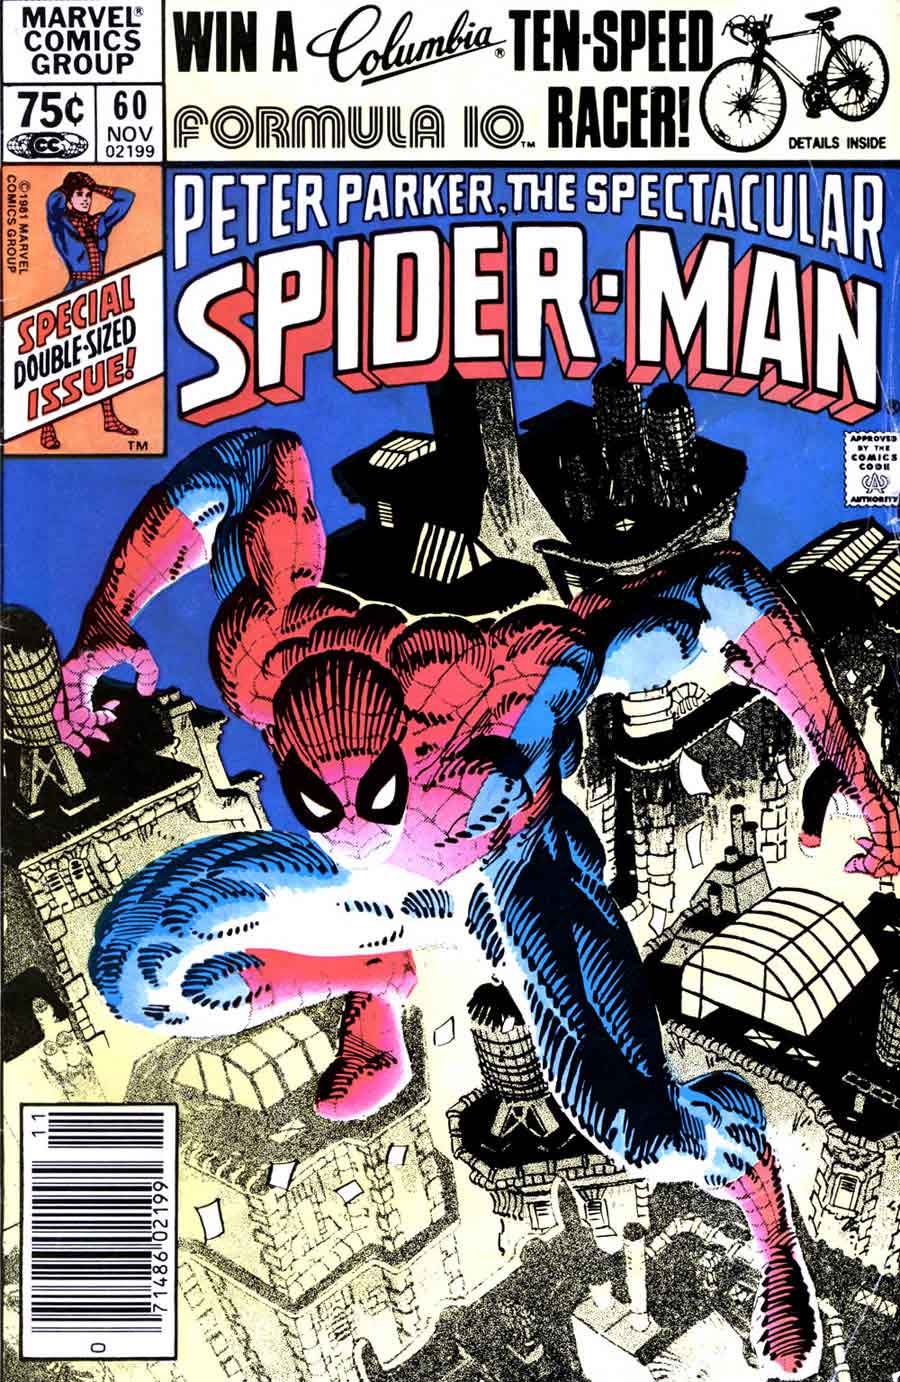 Spectacular Spider-man v2 #60 marvel 1980s comic book cover art by Frank Miller